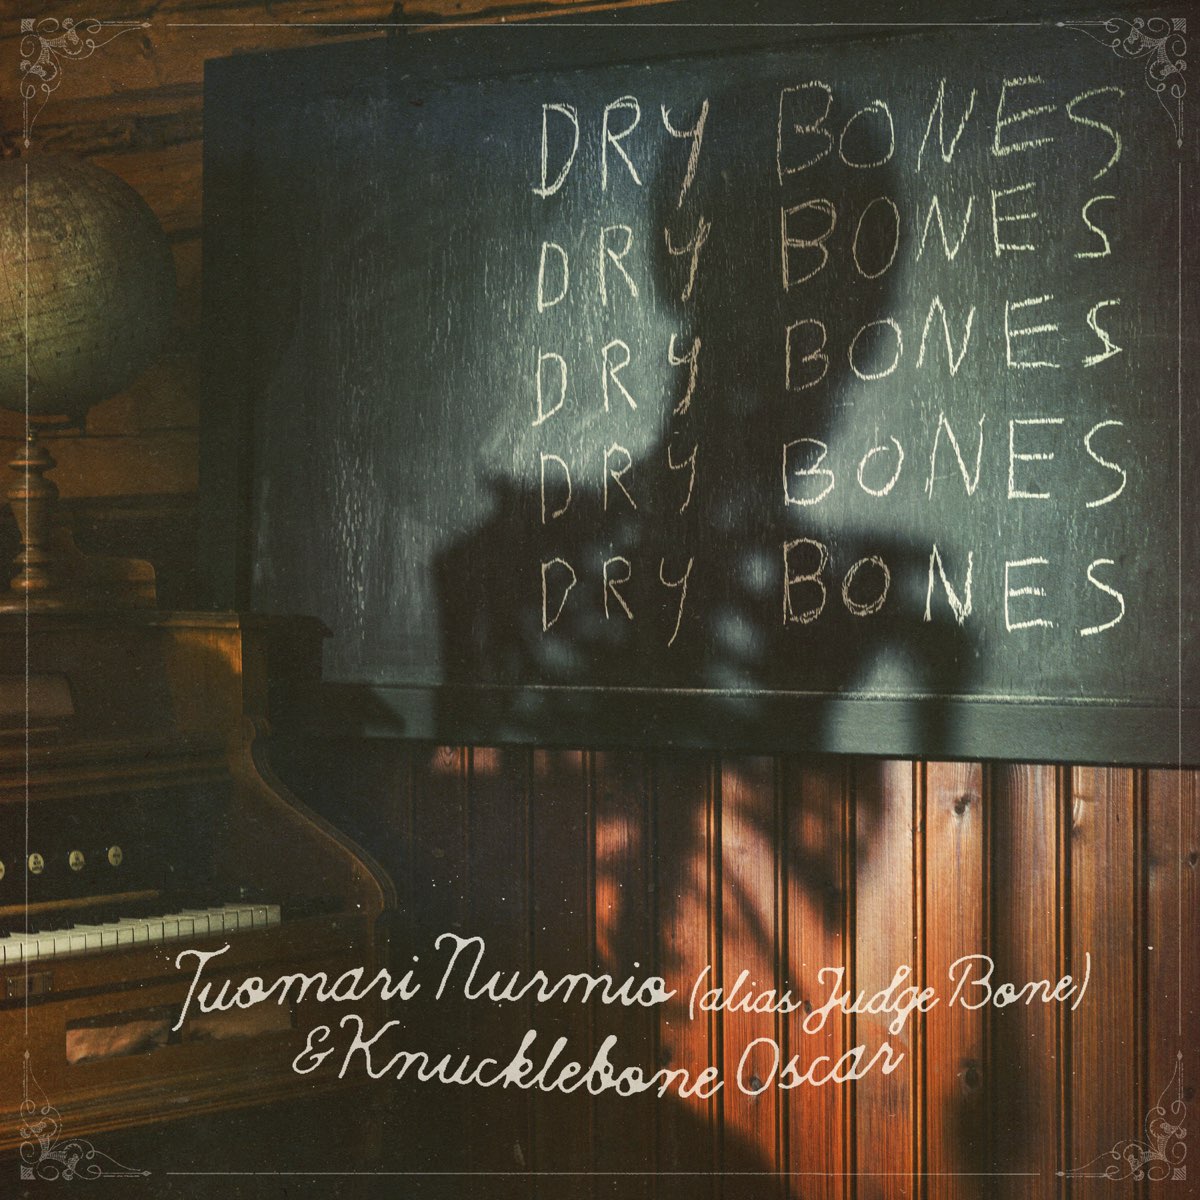 Dry bones. Tuomari Nurmio & Knucklebone Oscar. Knucklebones Bone. Муз.группа Tuomari Nurmio & Knucklebone Oscar -Главная Facebook.